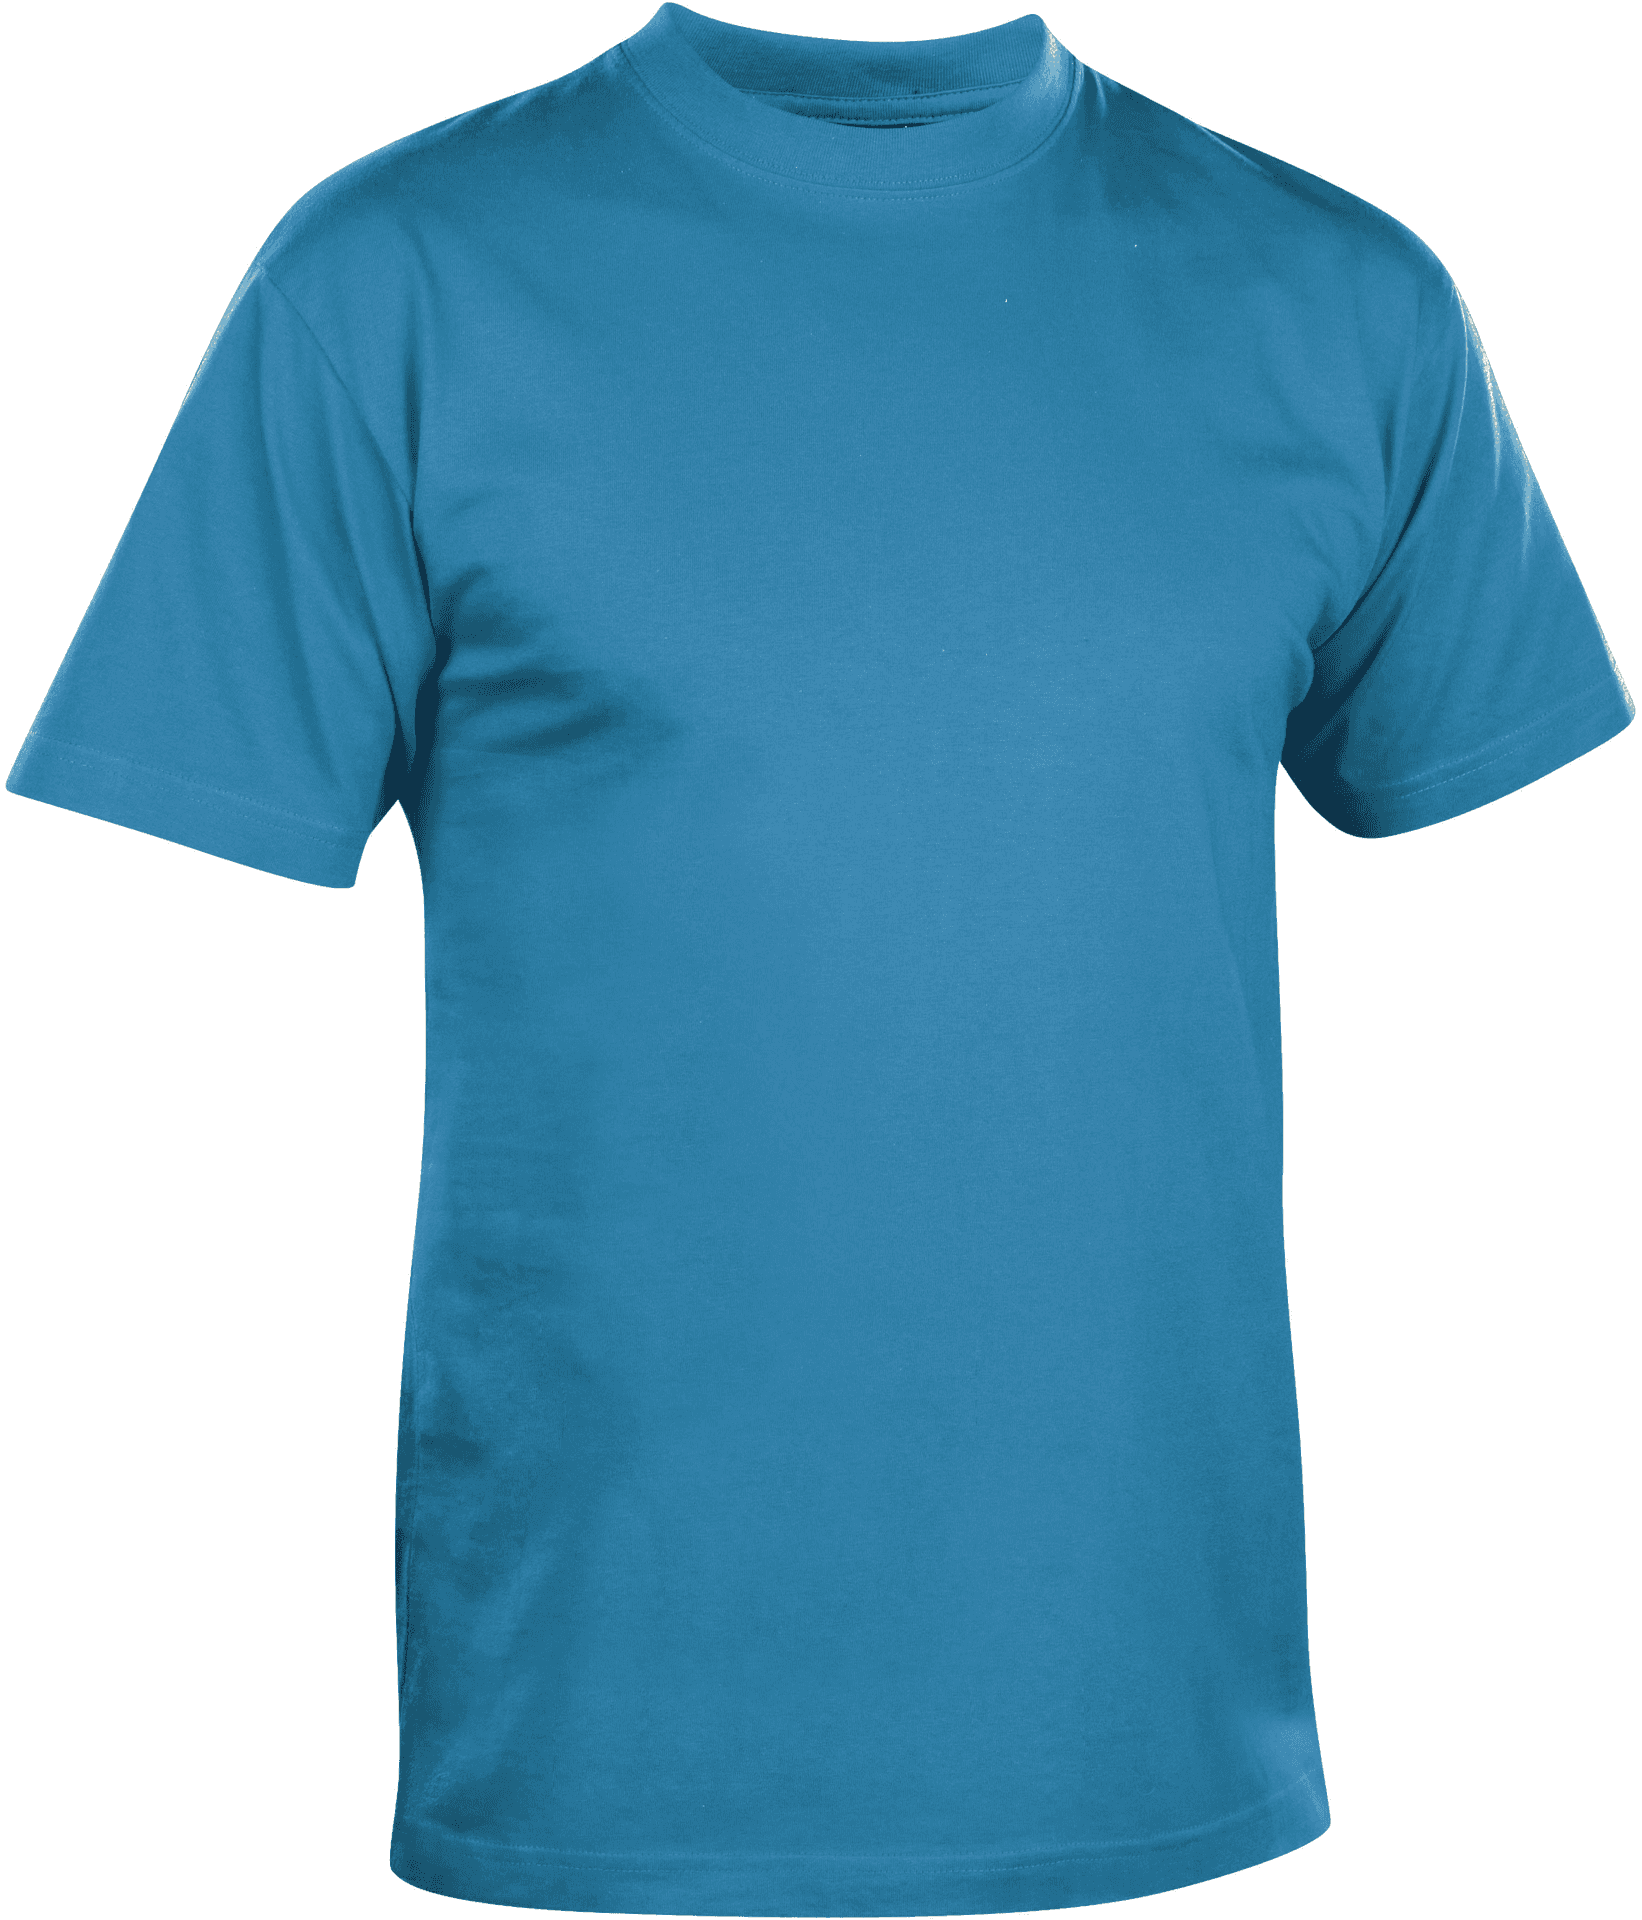 Plain Blue T Shirt Template PNG